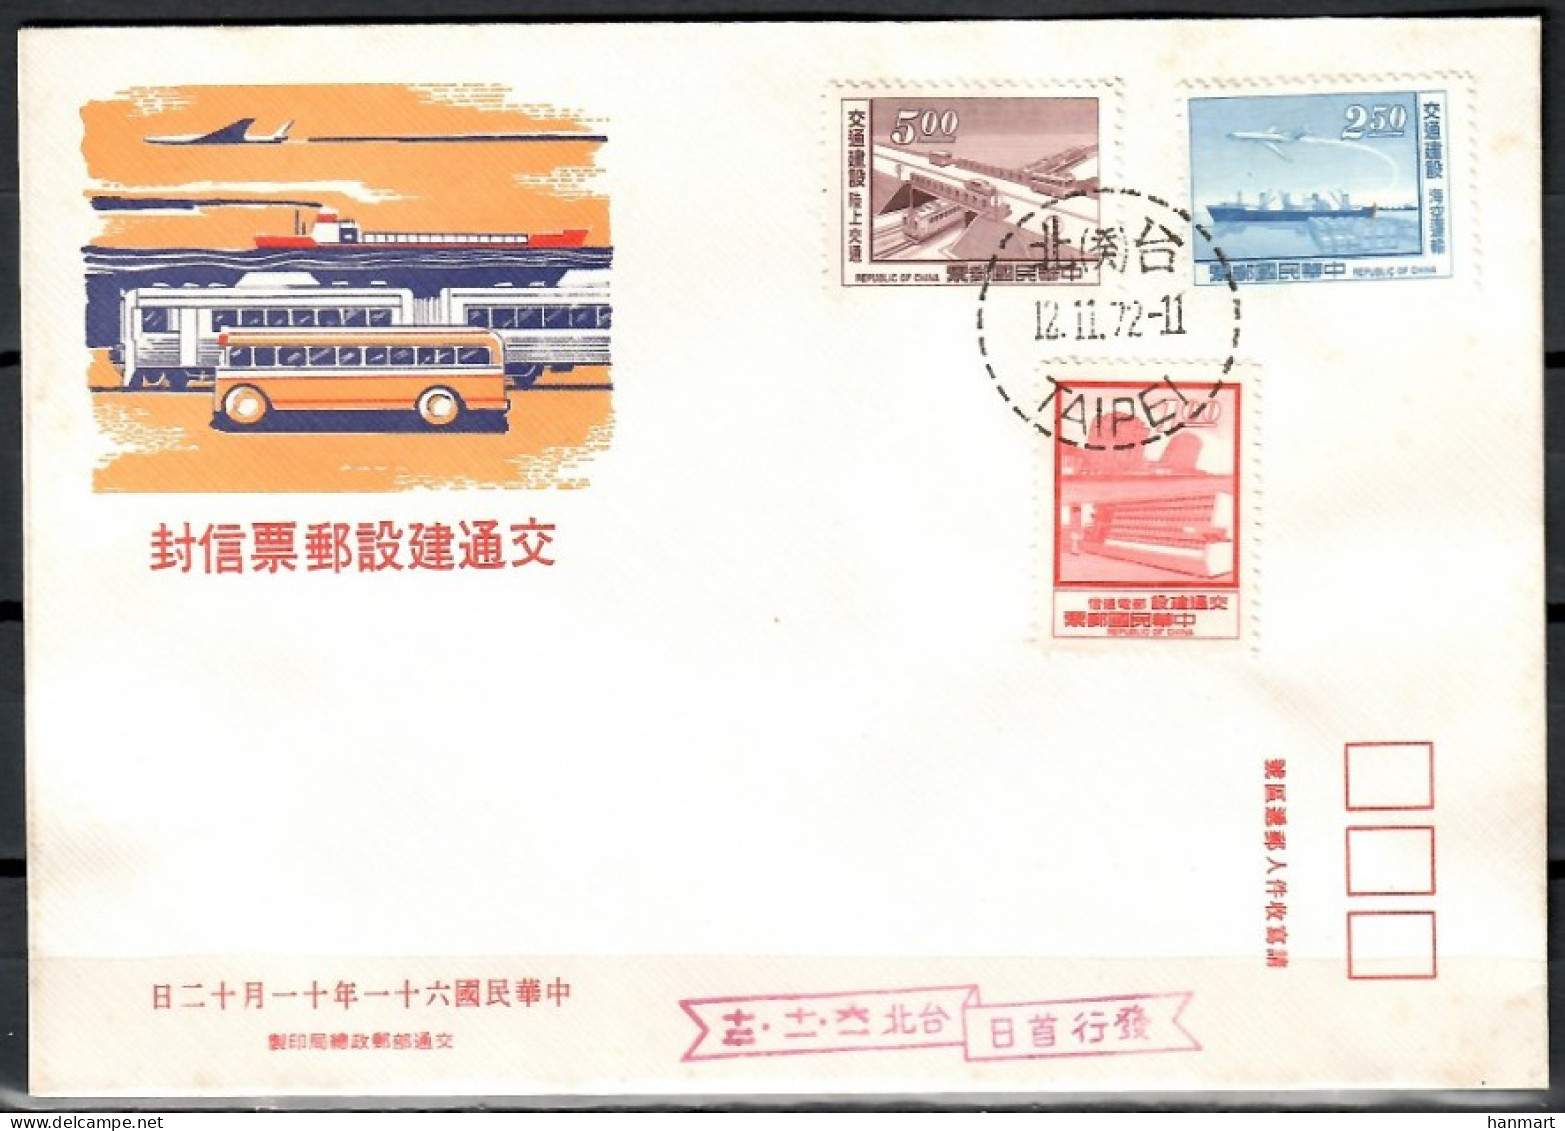 Taiwan (Republic Of China) 1972 Mi 926-928 FDC  (FDC ZS9 FRM926-928) - Cars